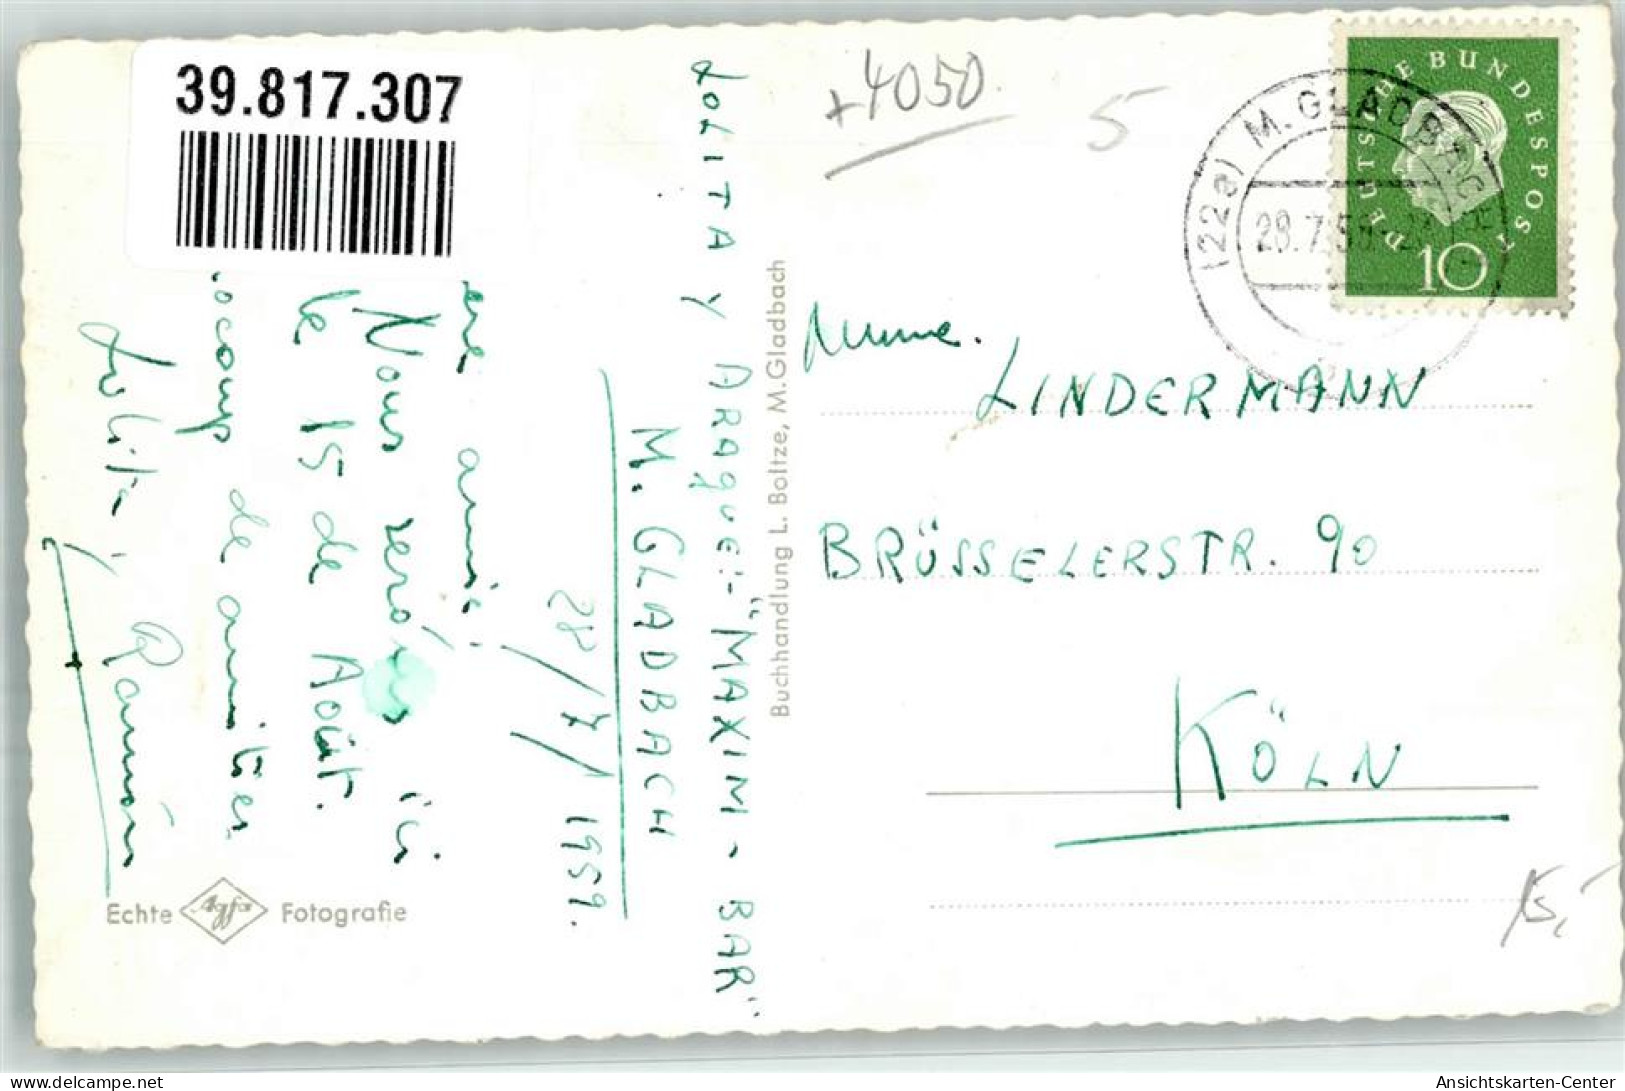 39817307 - Moenchengladbach - Moenchengladbach